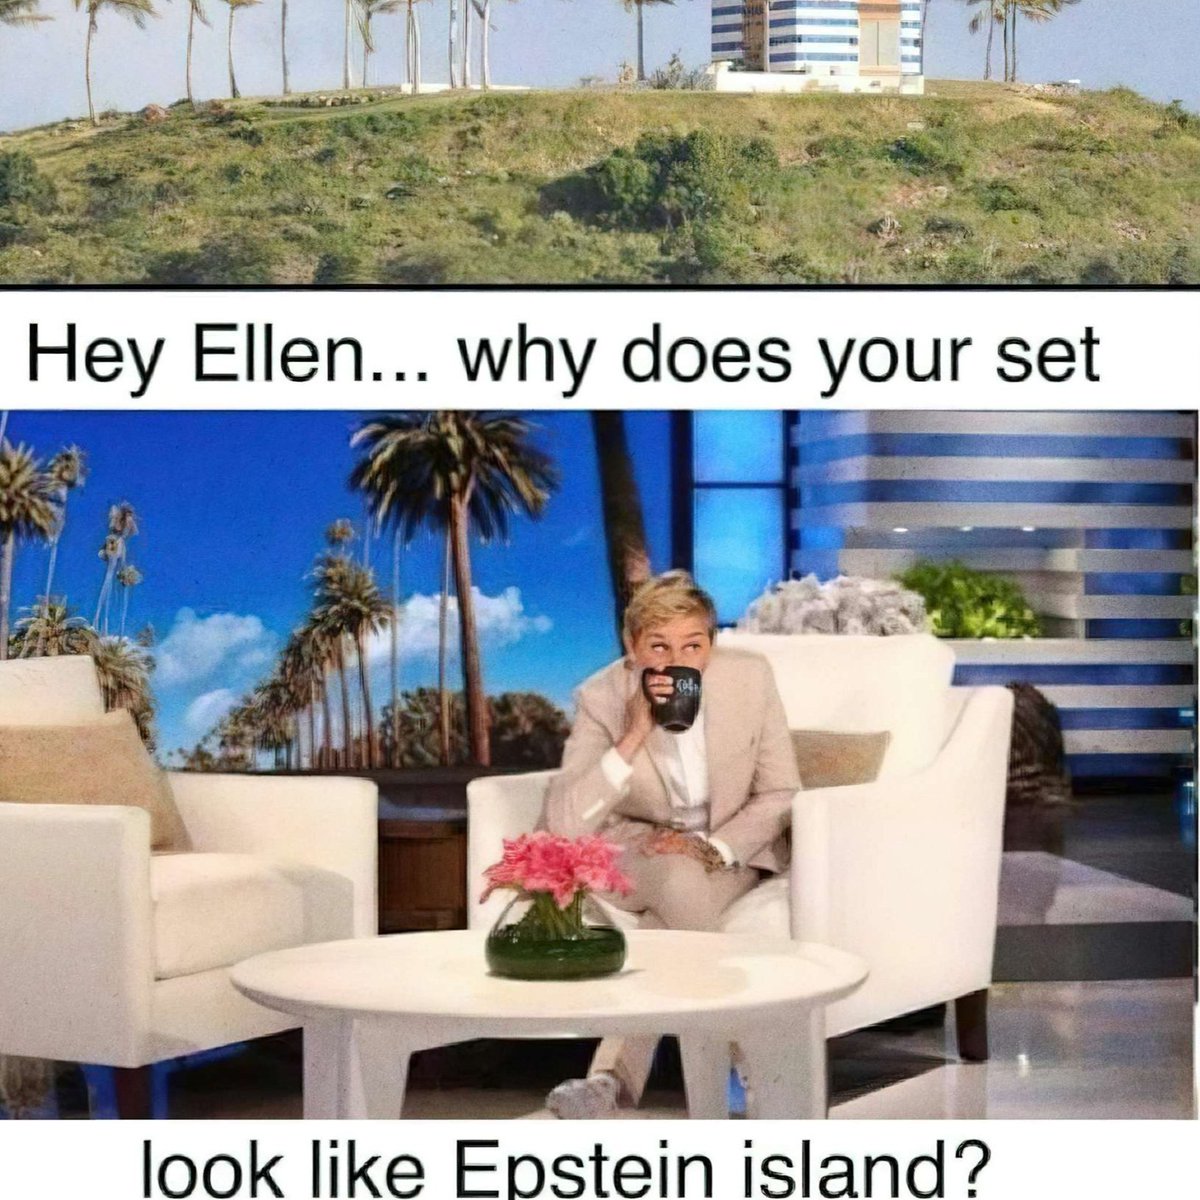 Looks like Epstein Island to me?